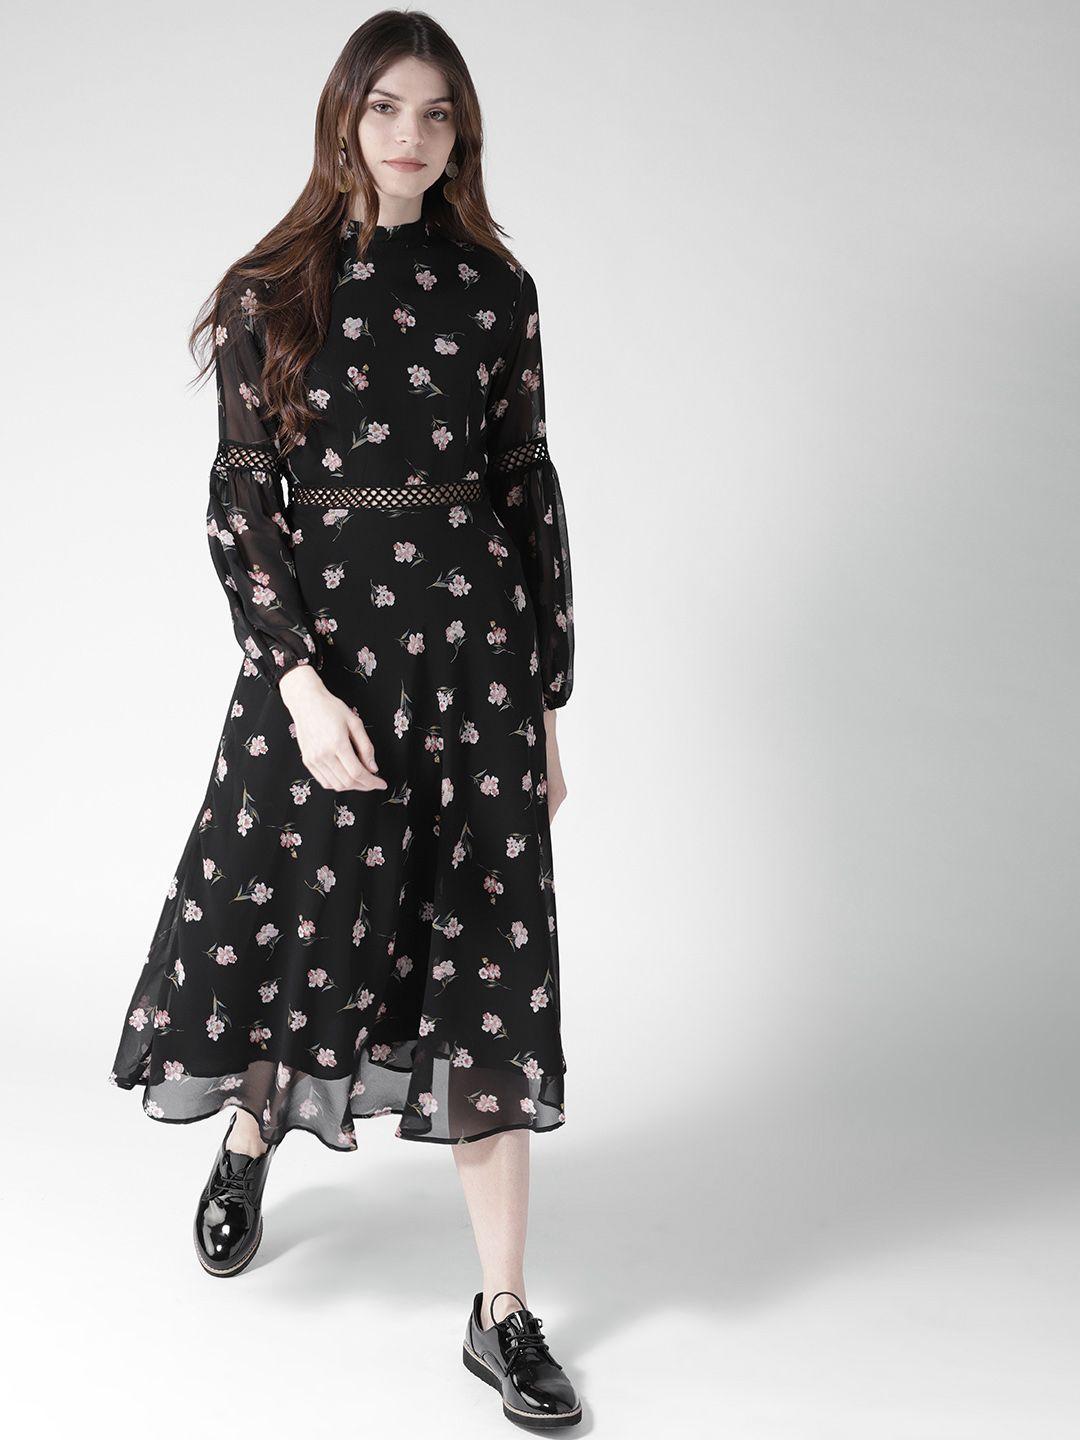 20dresses women black floral print fit & flare dress